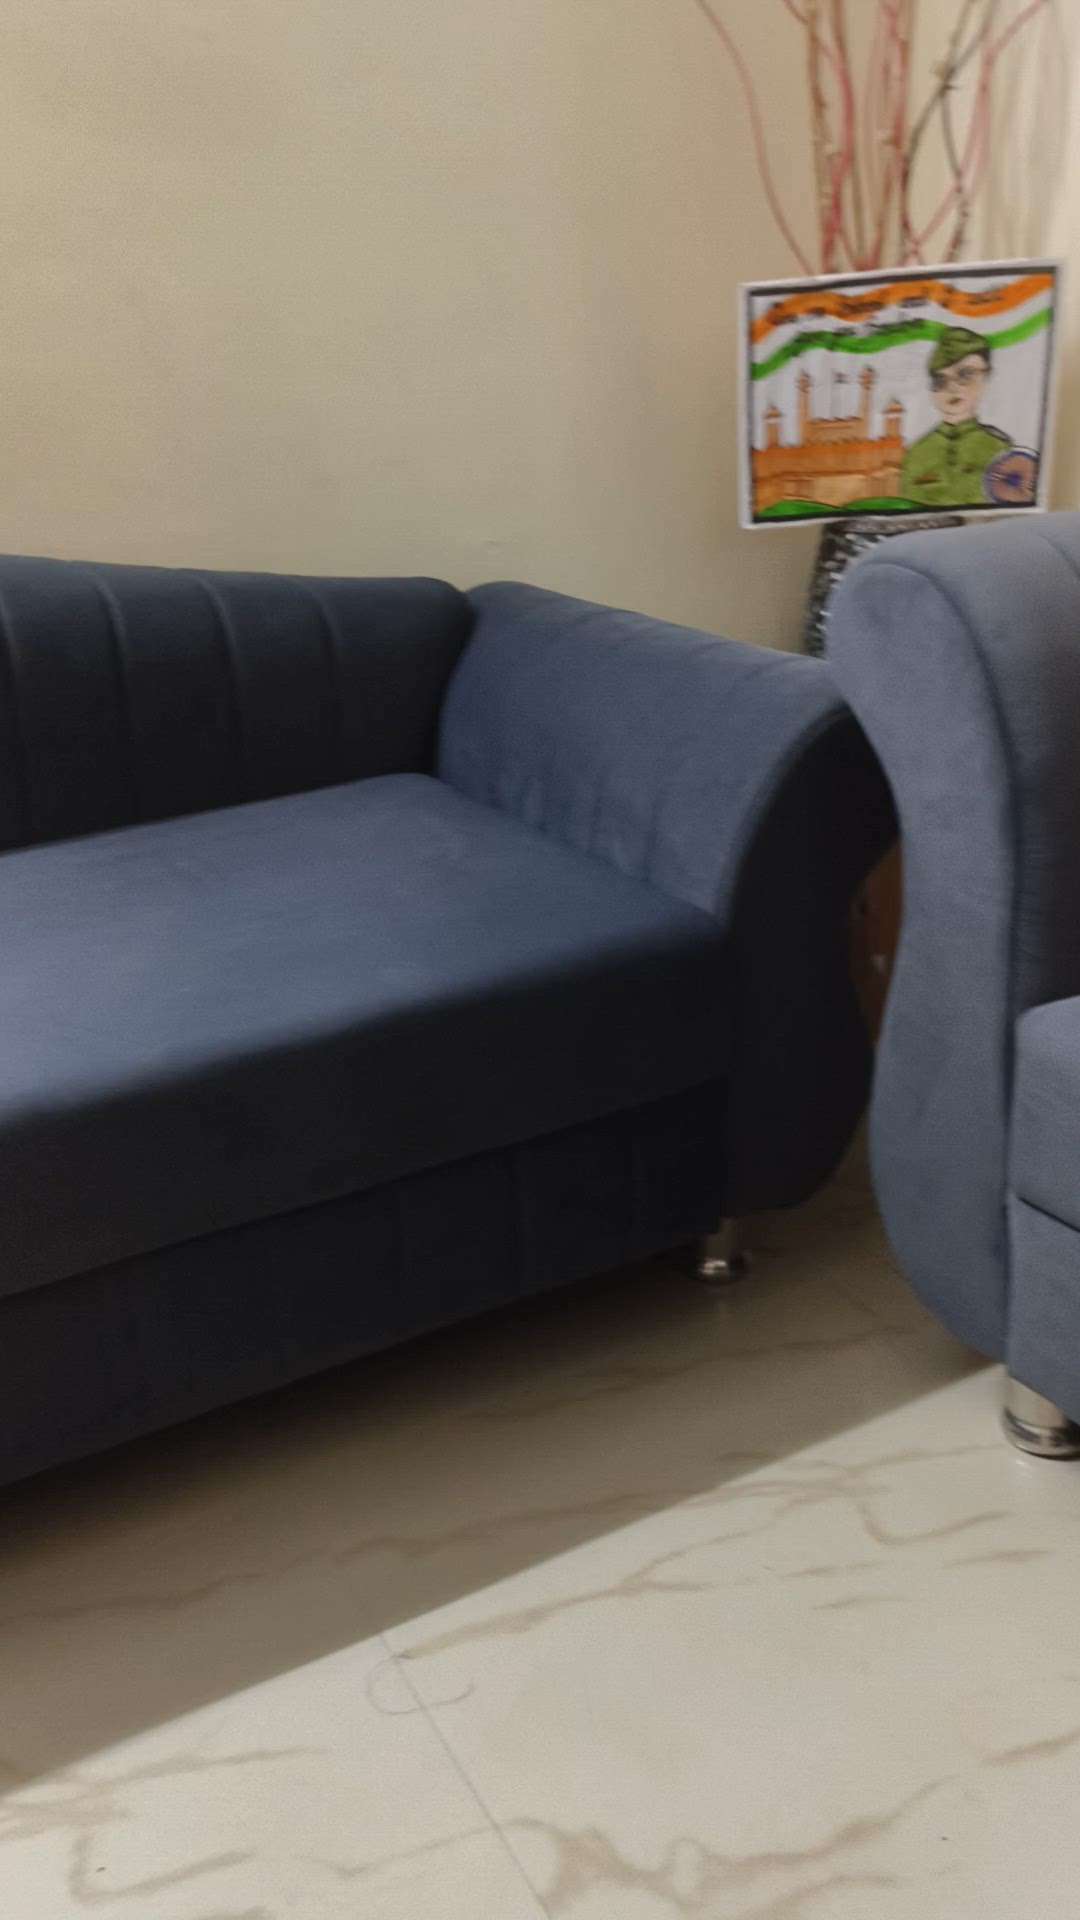 best sofa cushion  and  all over India service   with all. cushion  ....    700..parset.  cushion....is sofa

bedroom cushion...sofa cushion.... dining chair cushion... and mattress  cushion....... contact number..8827766794...
.
.
.
.
.
.
.
.
. #Sofas  #NEW_SOFA  #LUXURY_SOFA  #LivingRoomSofa  #SleeperSofa  #LeatherSofa  #sofacleaning  #sofamalaysia  #sofashampooing  #safaritypo  #sofacloth  #sofafurniture  #sofabed  #NEW_SOFA